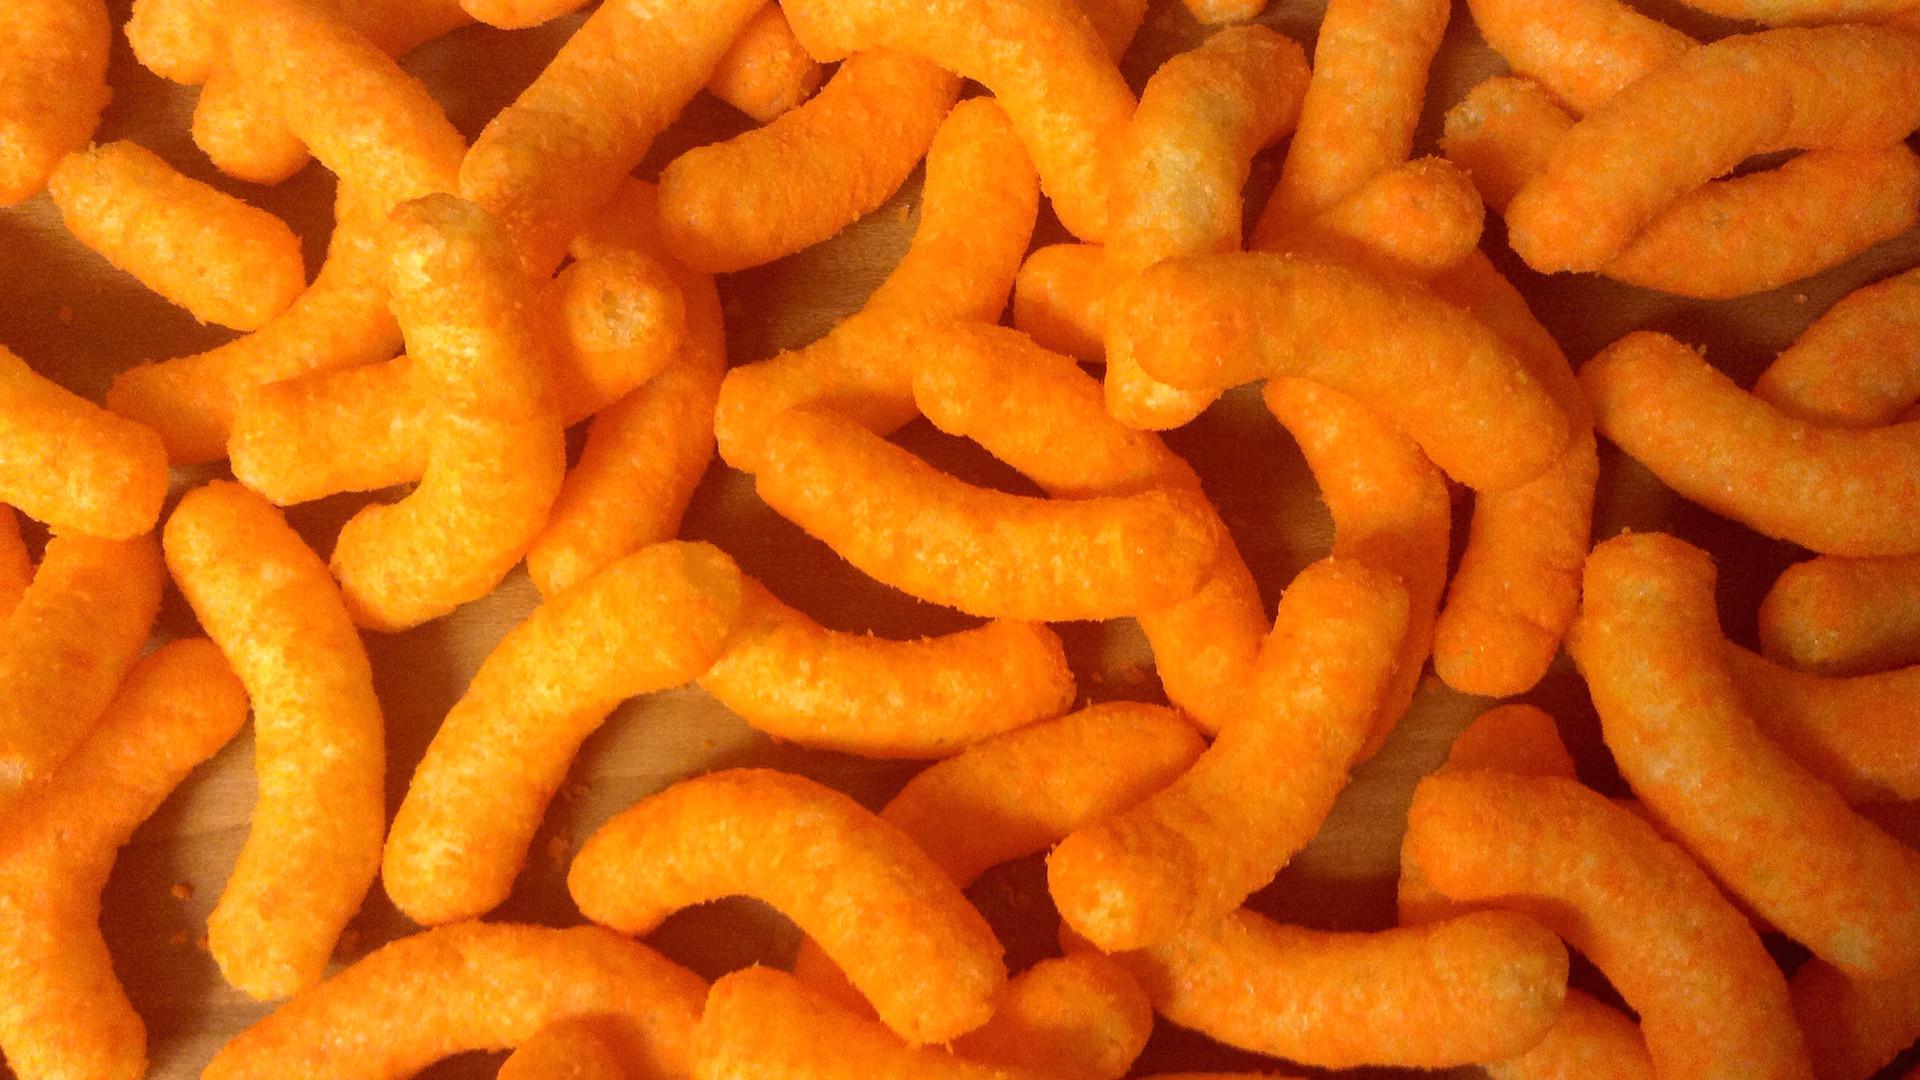 Keyword: Cheetos.